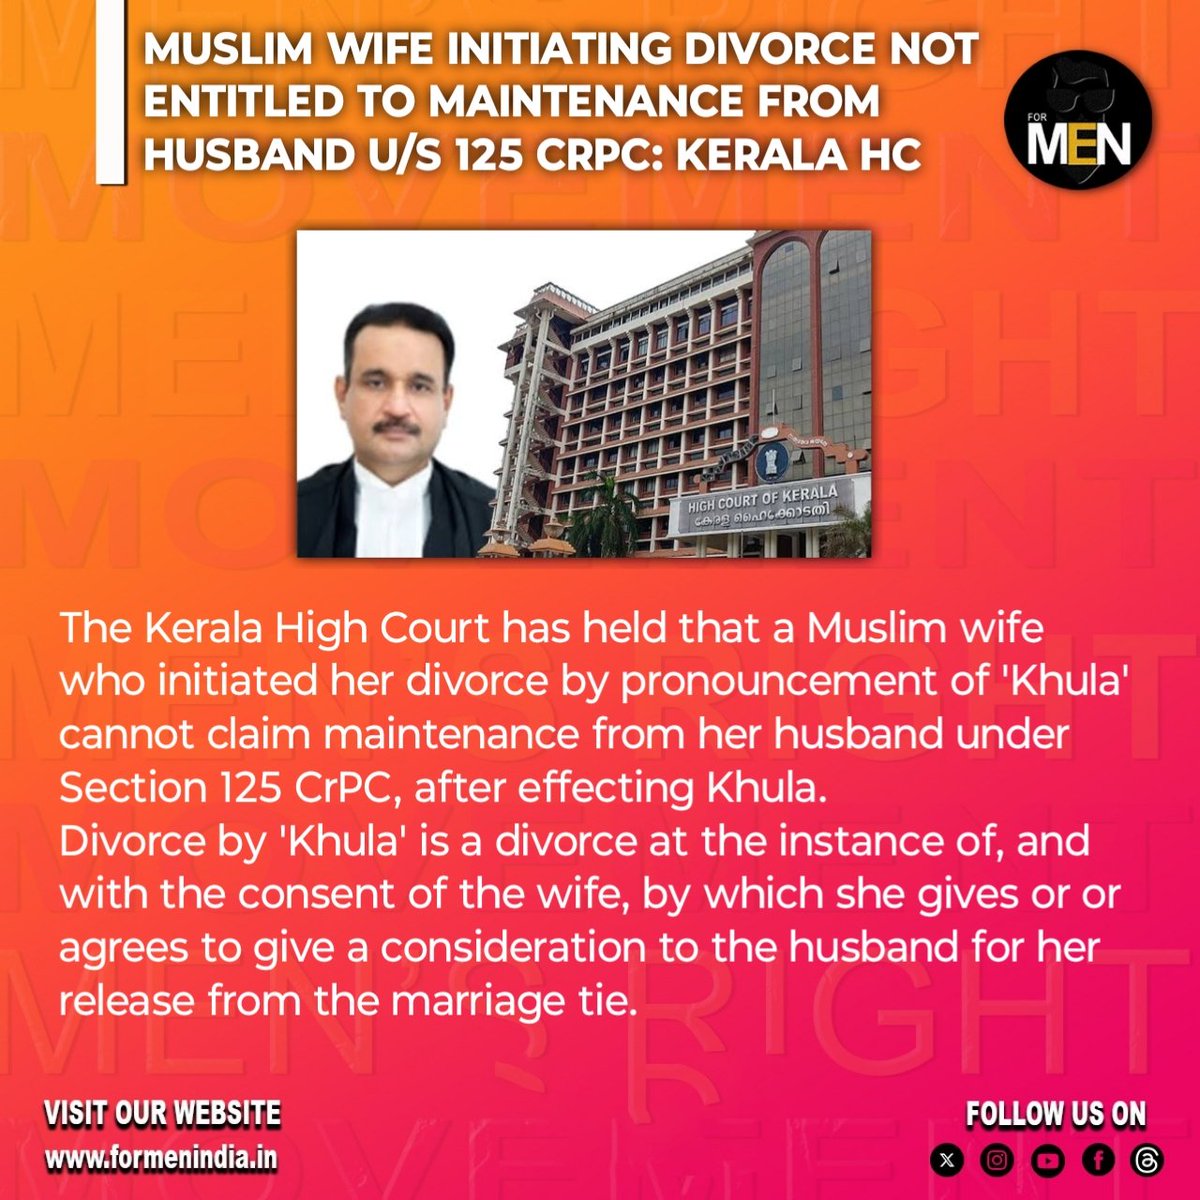 #formenindia #mensrights #mentoo #mensrightsactivist #men #marriage #divorce #muslimwedding #india #law #viral #explore